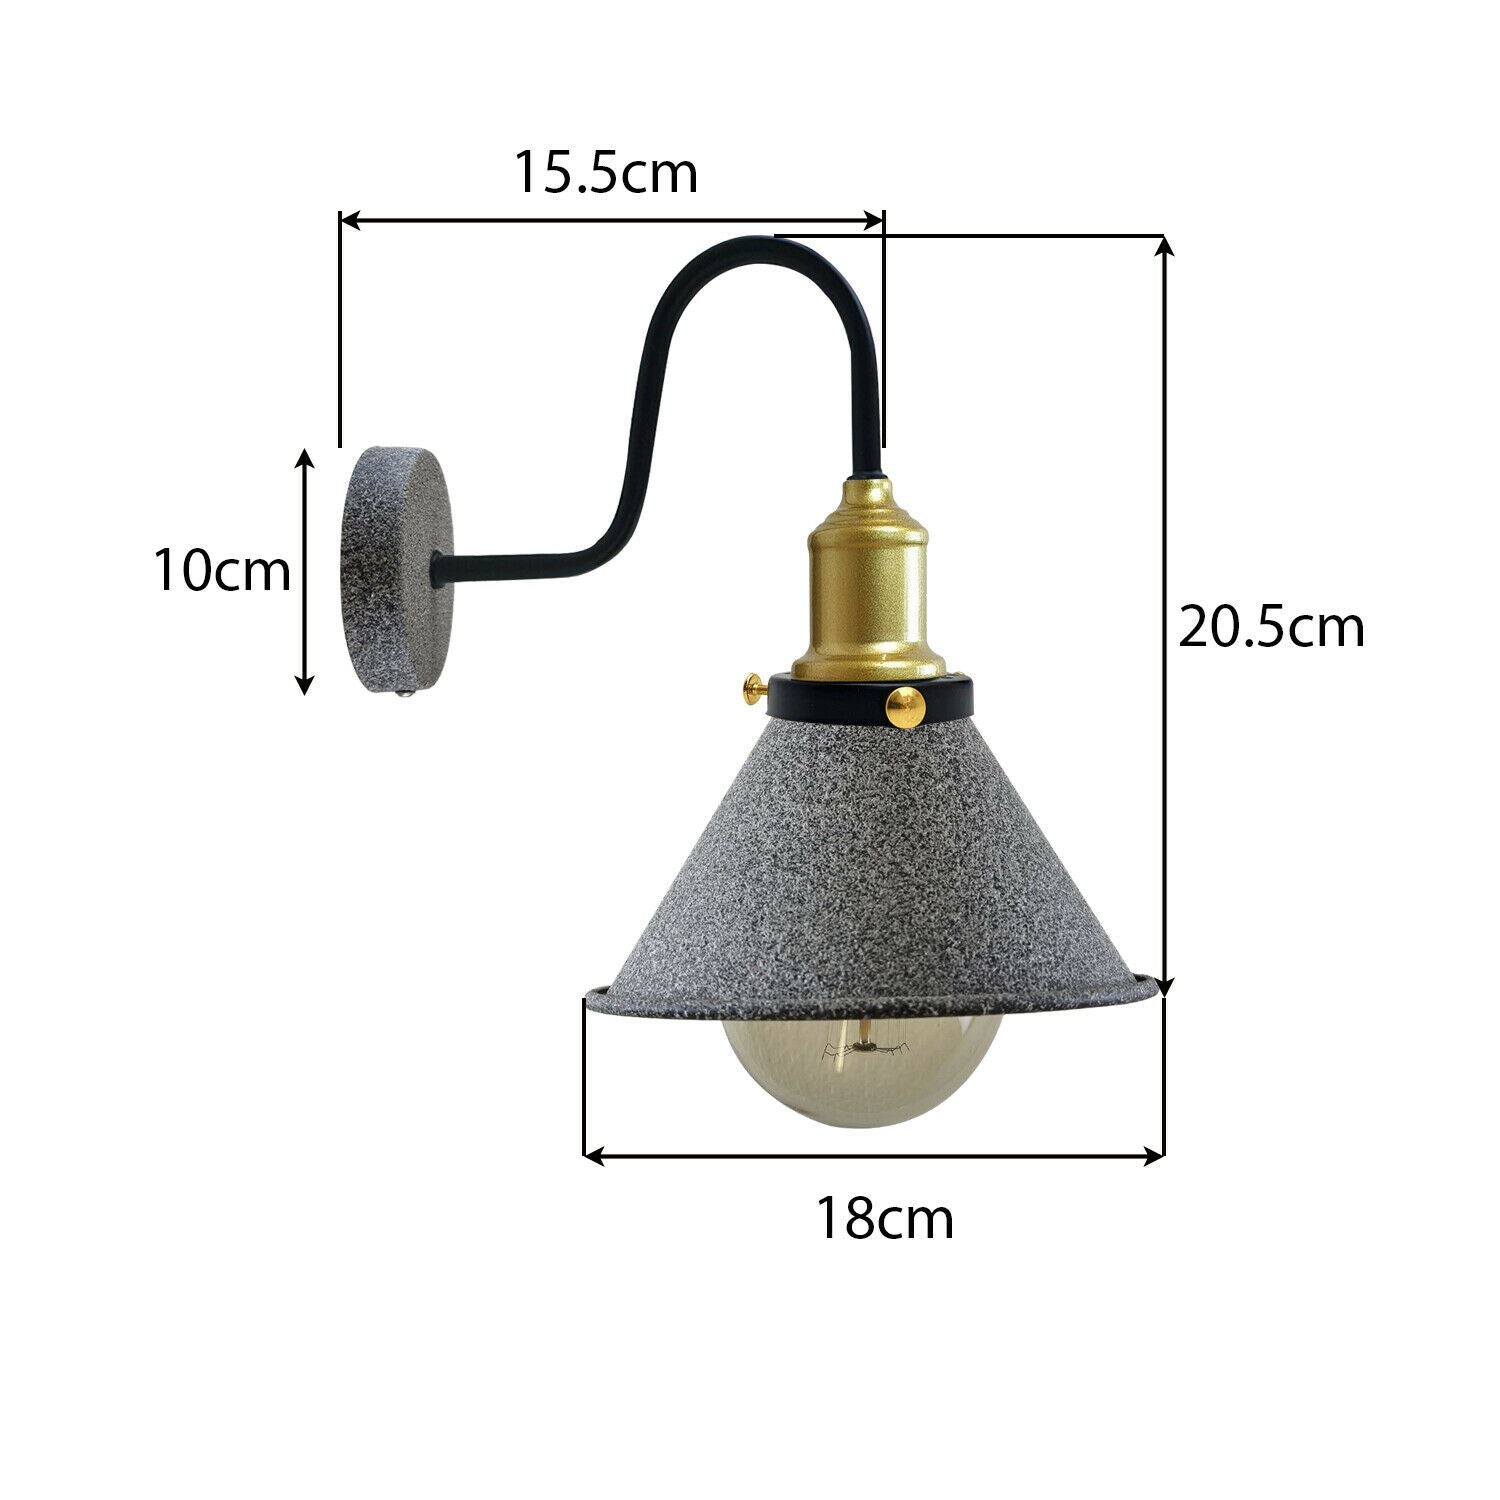 Modern Industrial Vintage Retro Rustic Sconce Wall Light Lamp Fitting Fixture UK~1201 - LEDSone UK Ltd